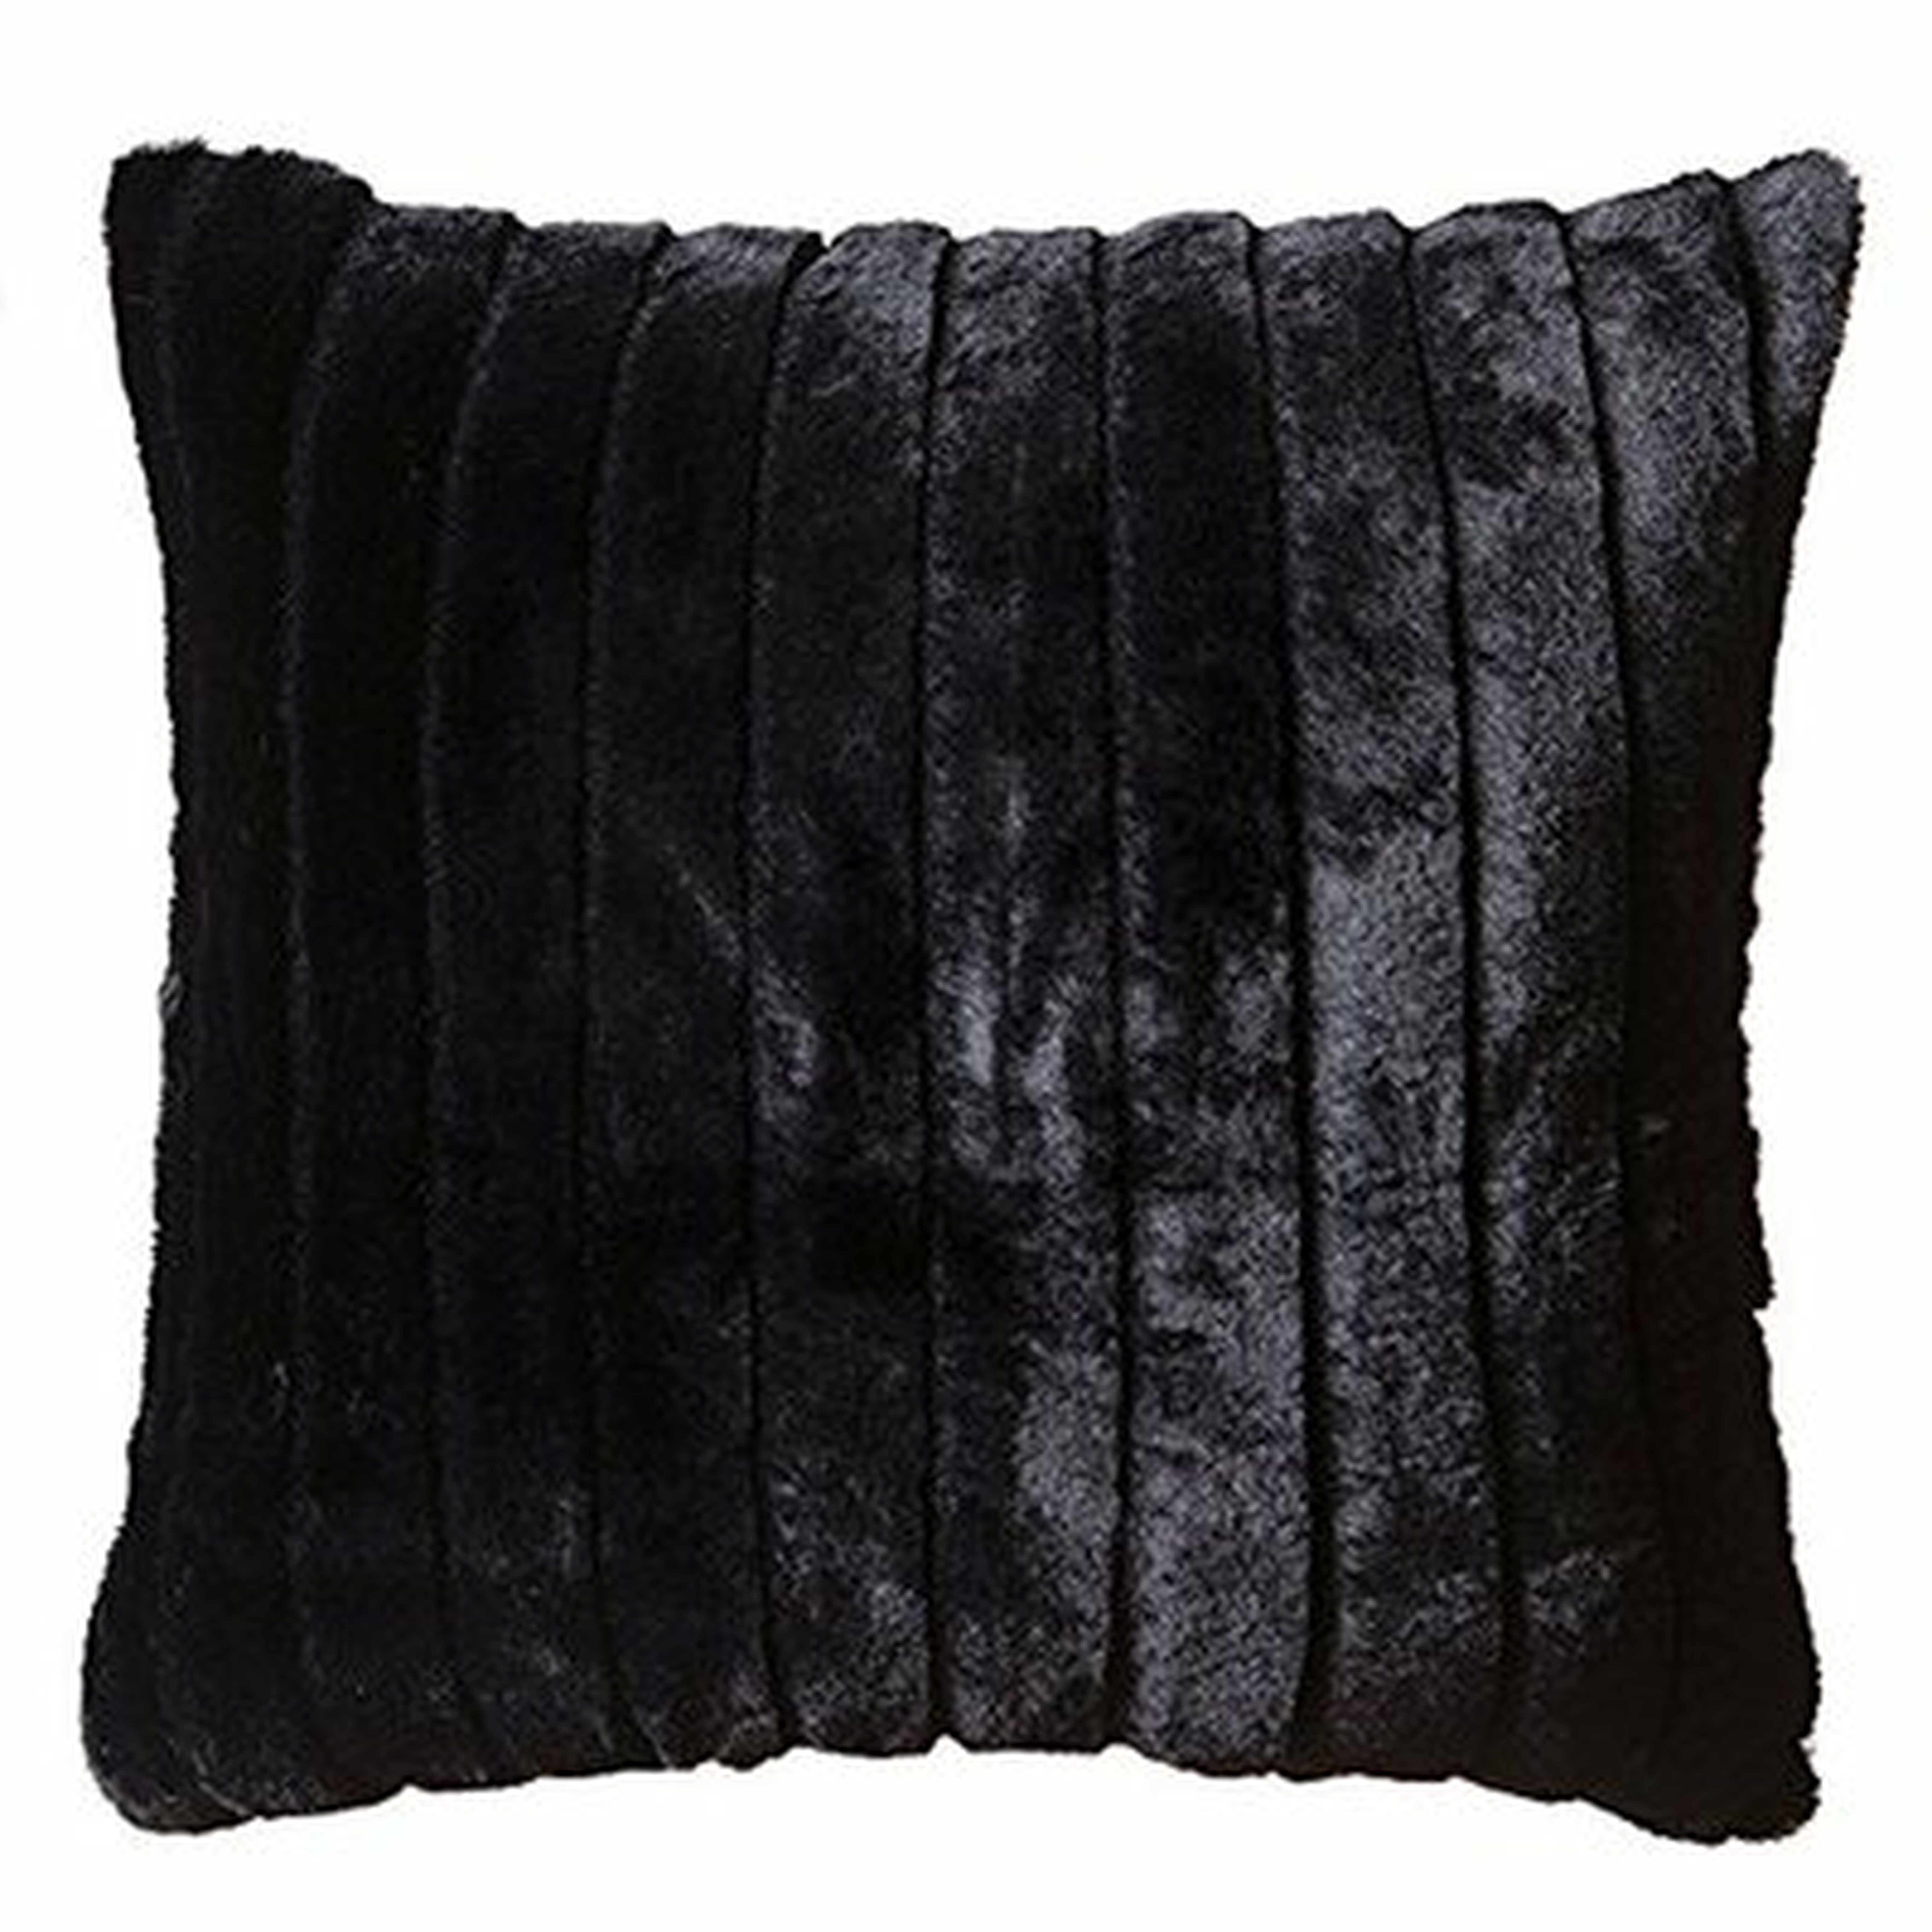 Whitecliff Faux Fur Throw Pillow 18"x18" With Insert, Black Striped Mink - Wayfair